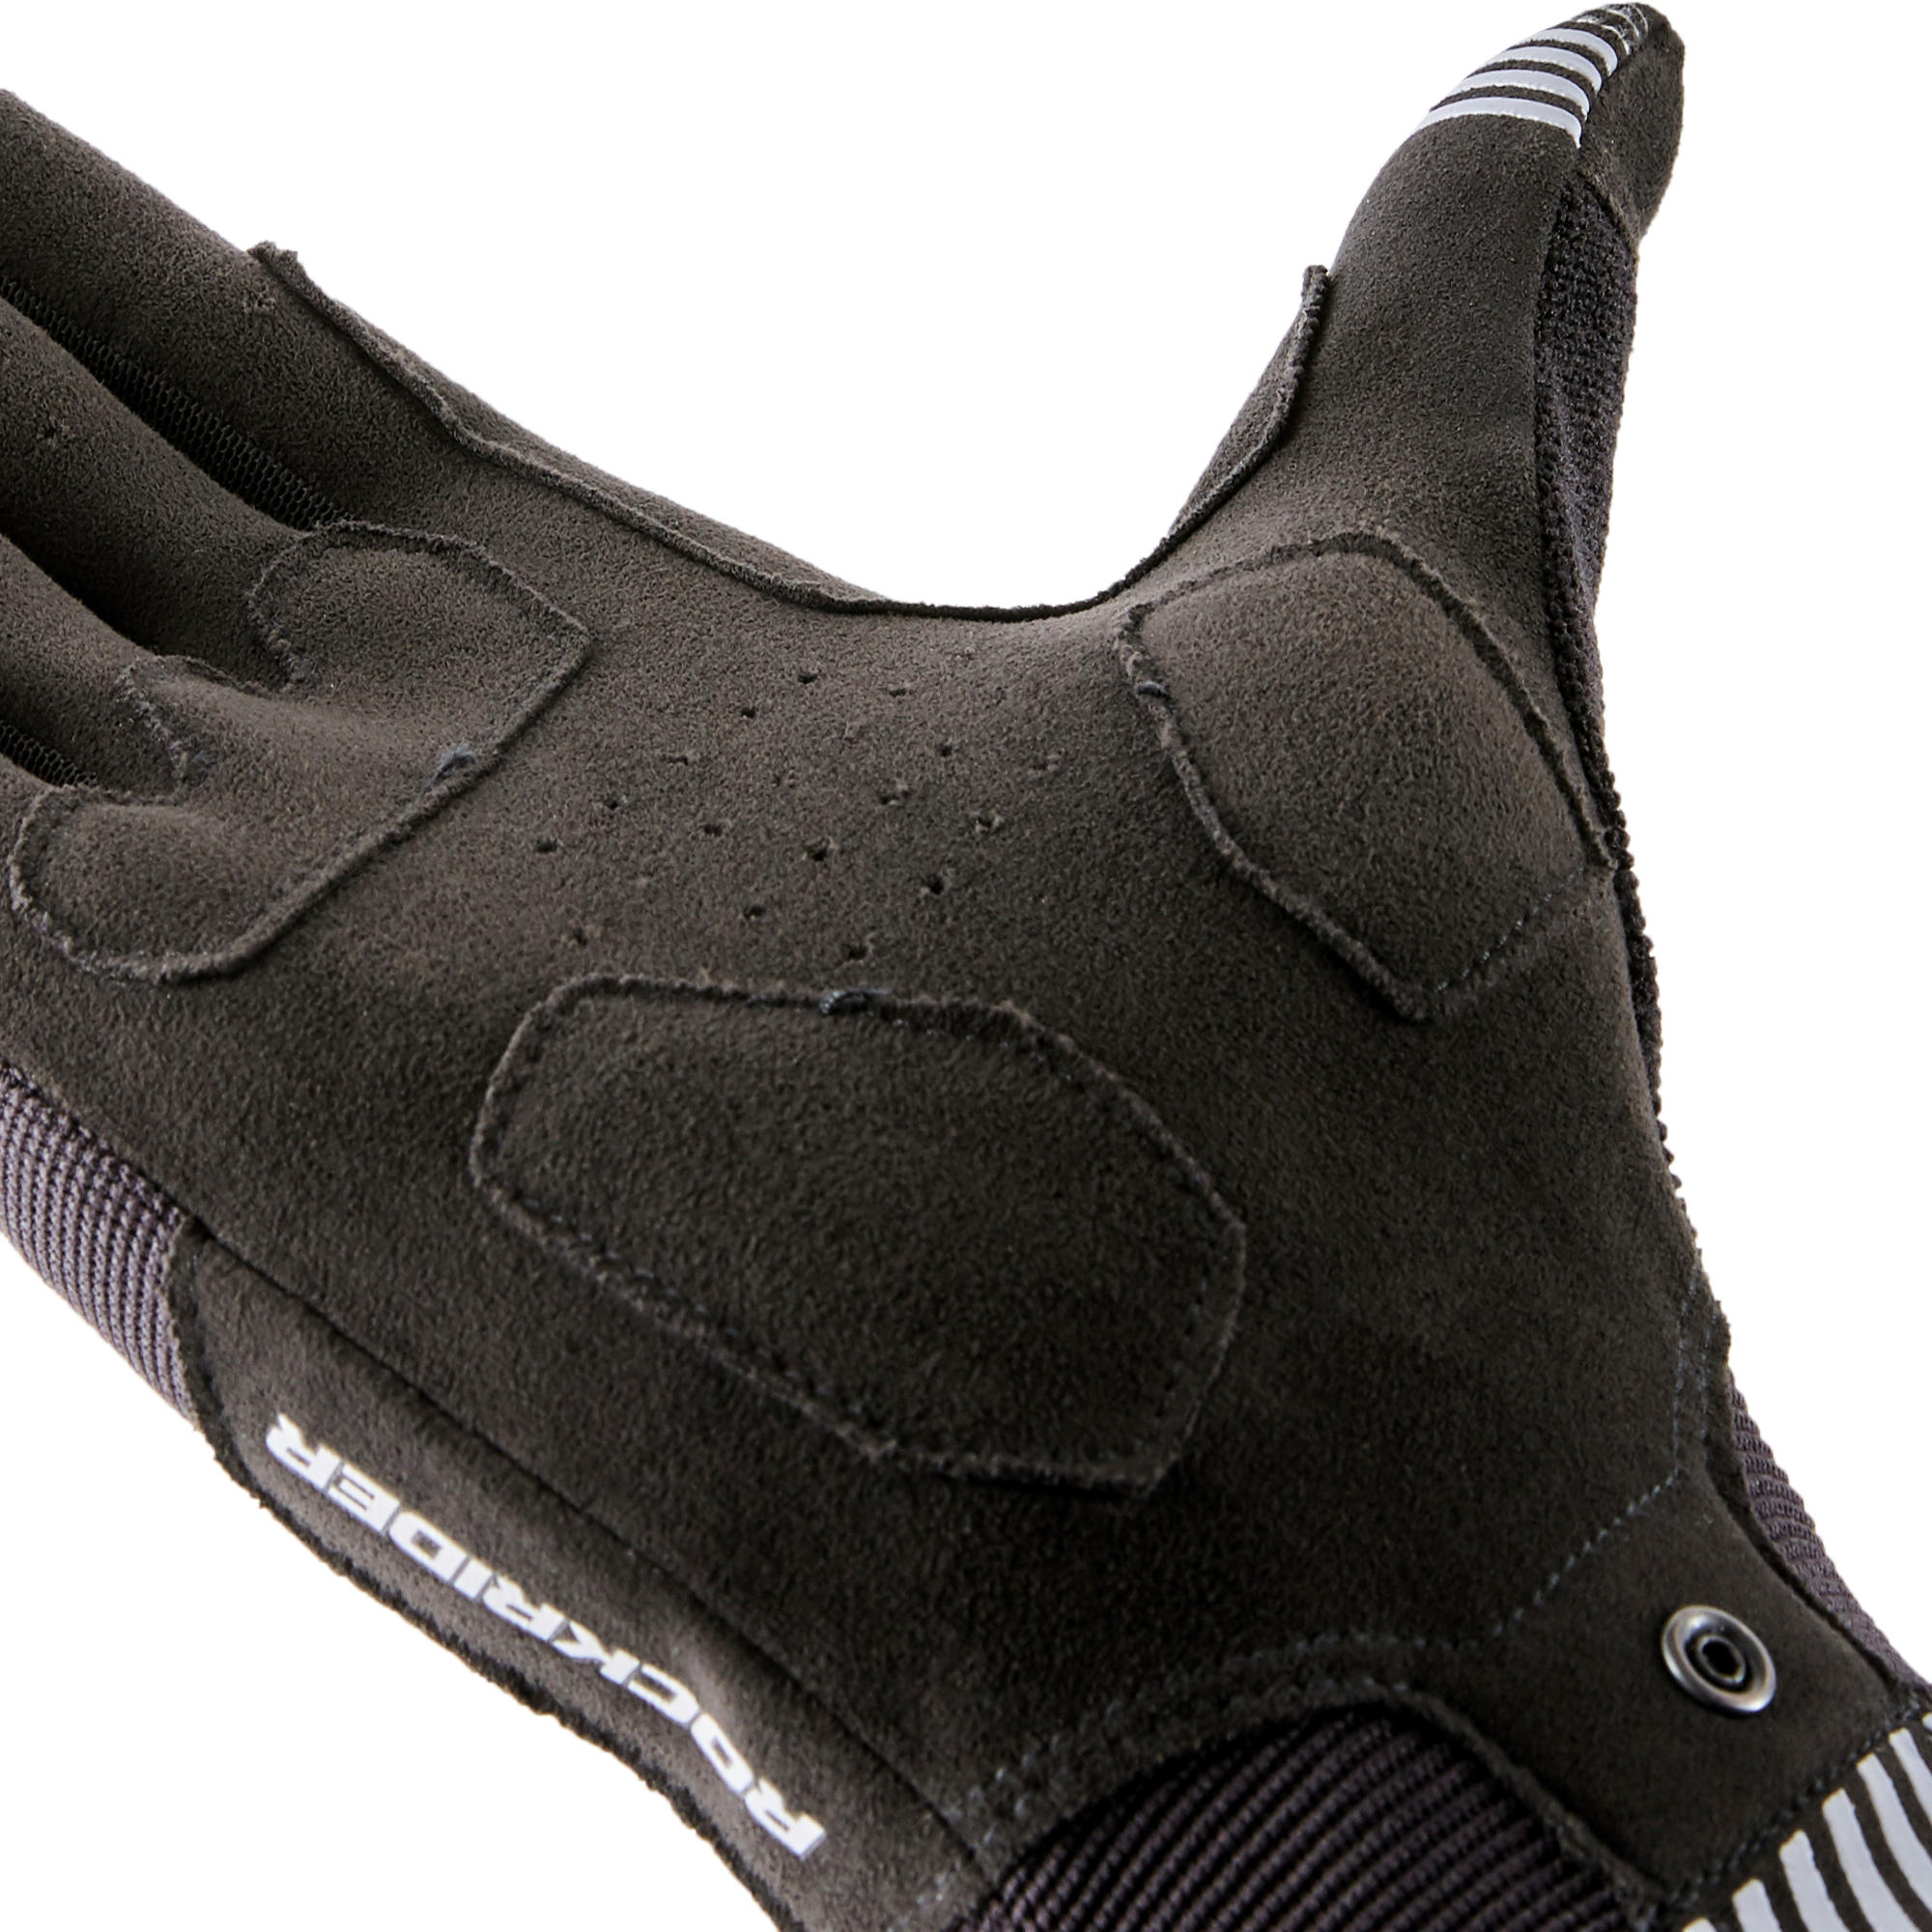 100 mountain bike gloves